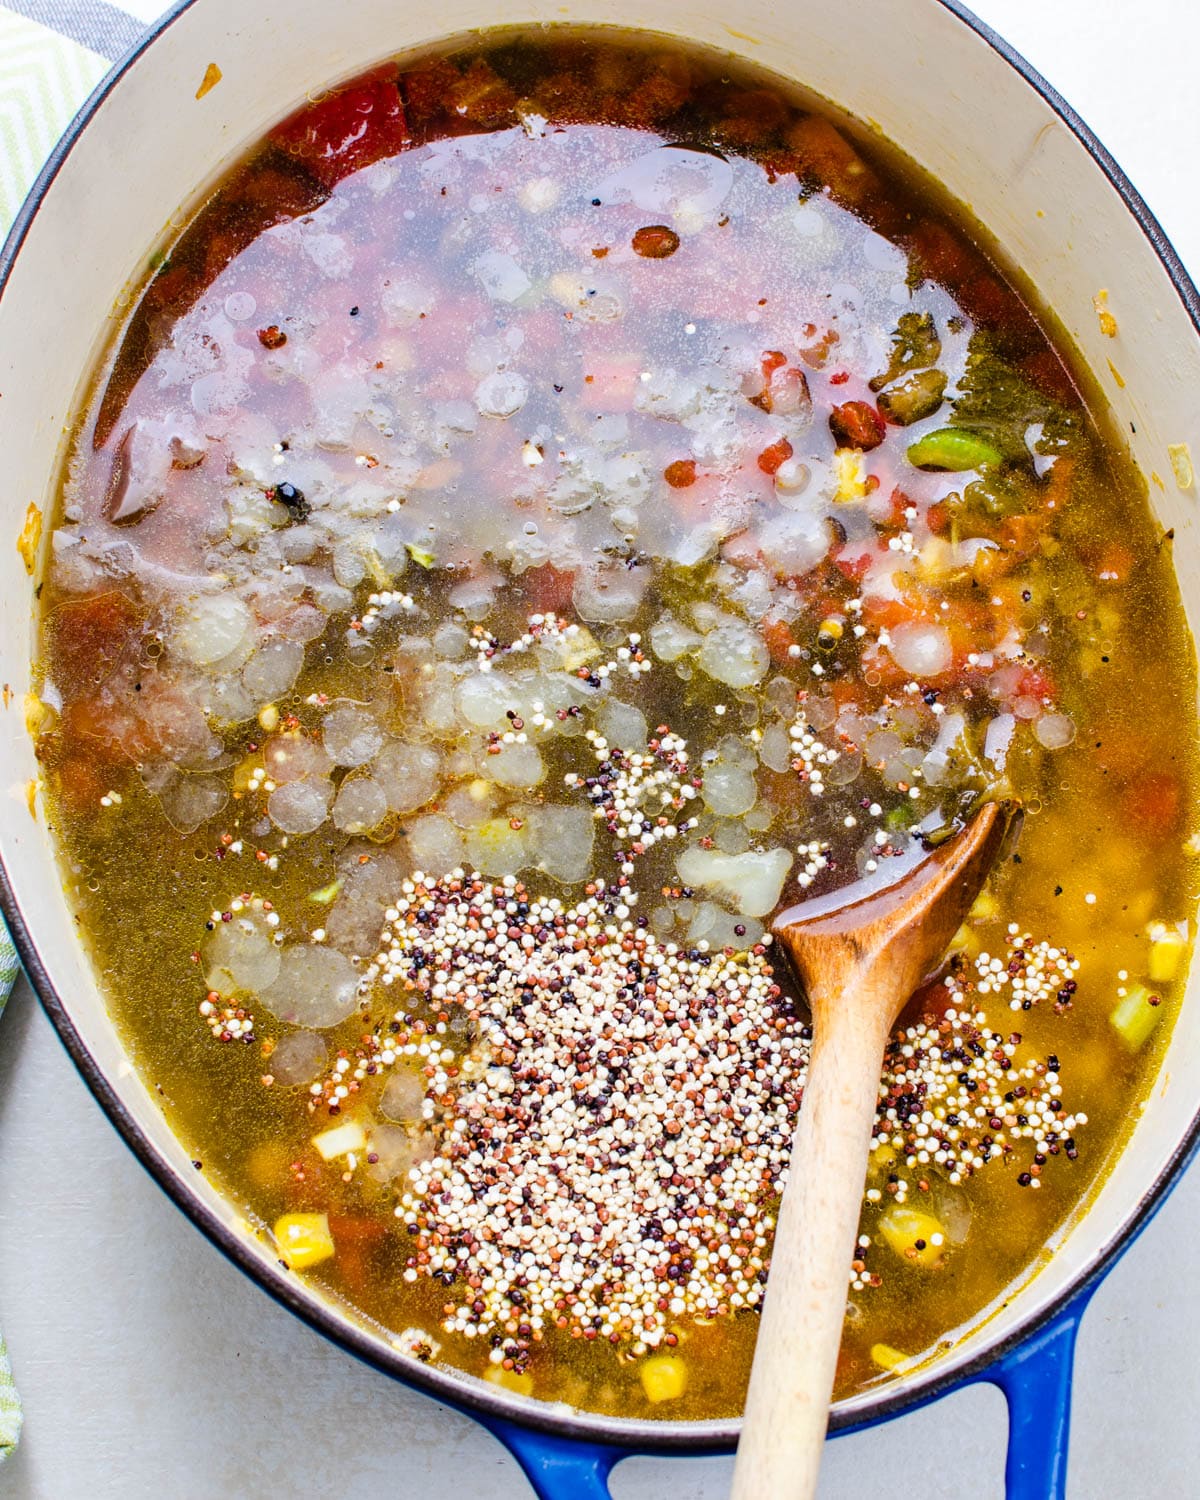 Adding the quinoa to the soup.